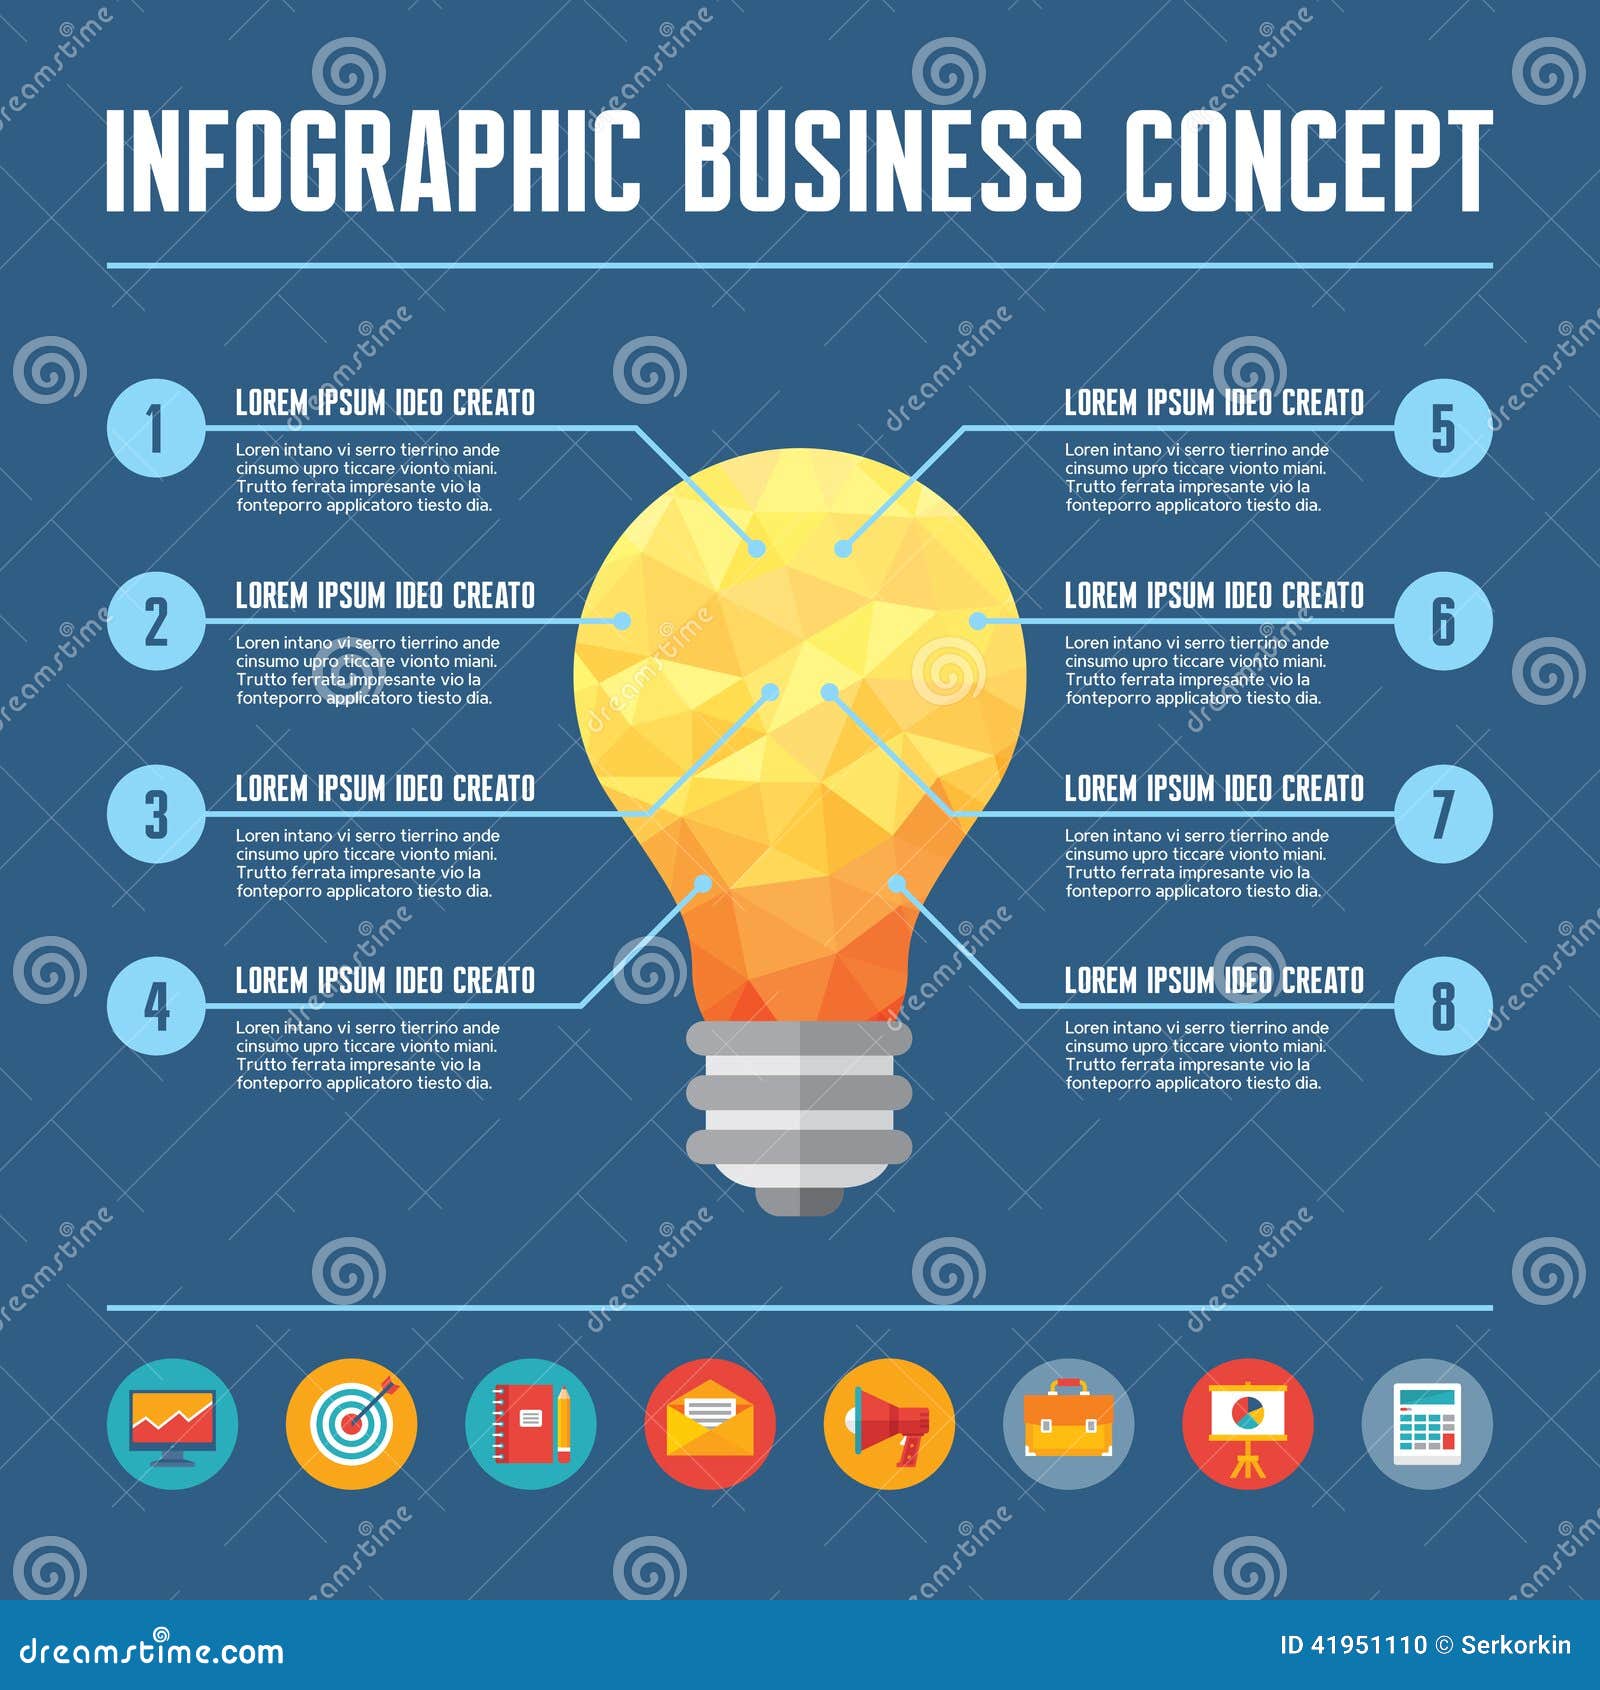 Infographic Business Concept - Creative Idea Illustration Stock Vector